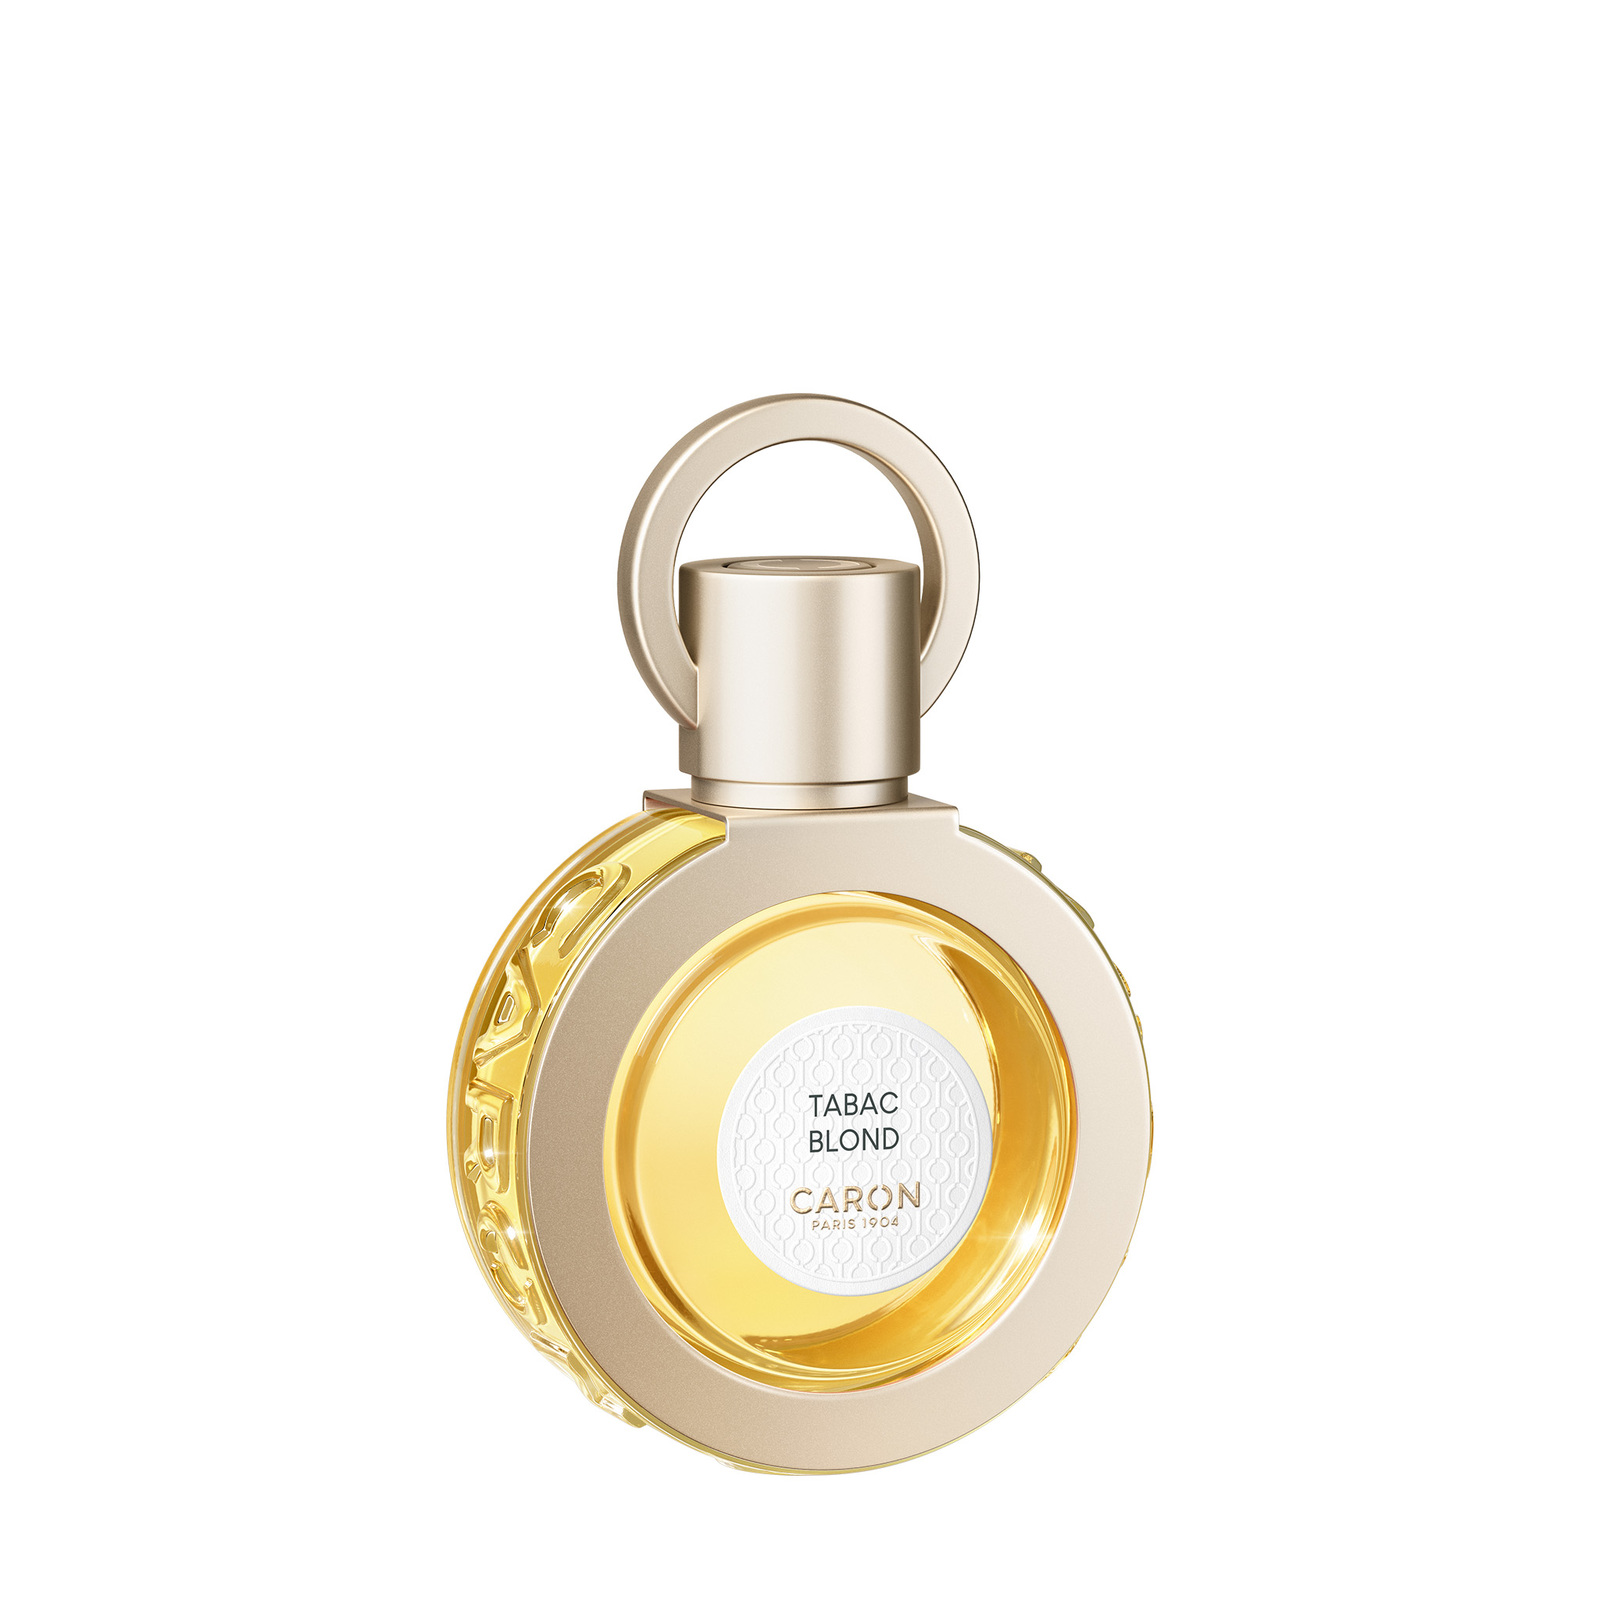 CARON Tabac Blond Perfume 30ml Refillable